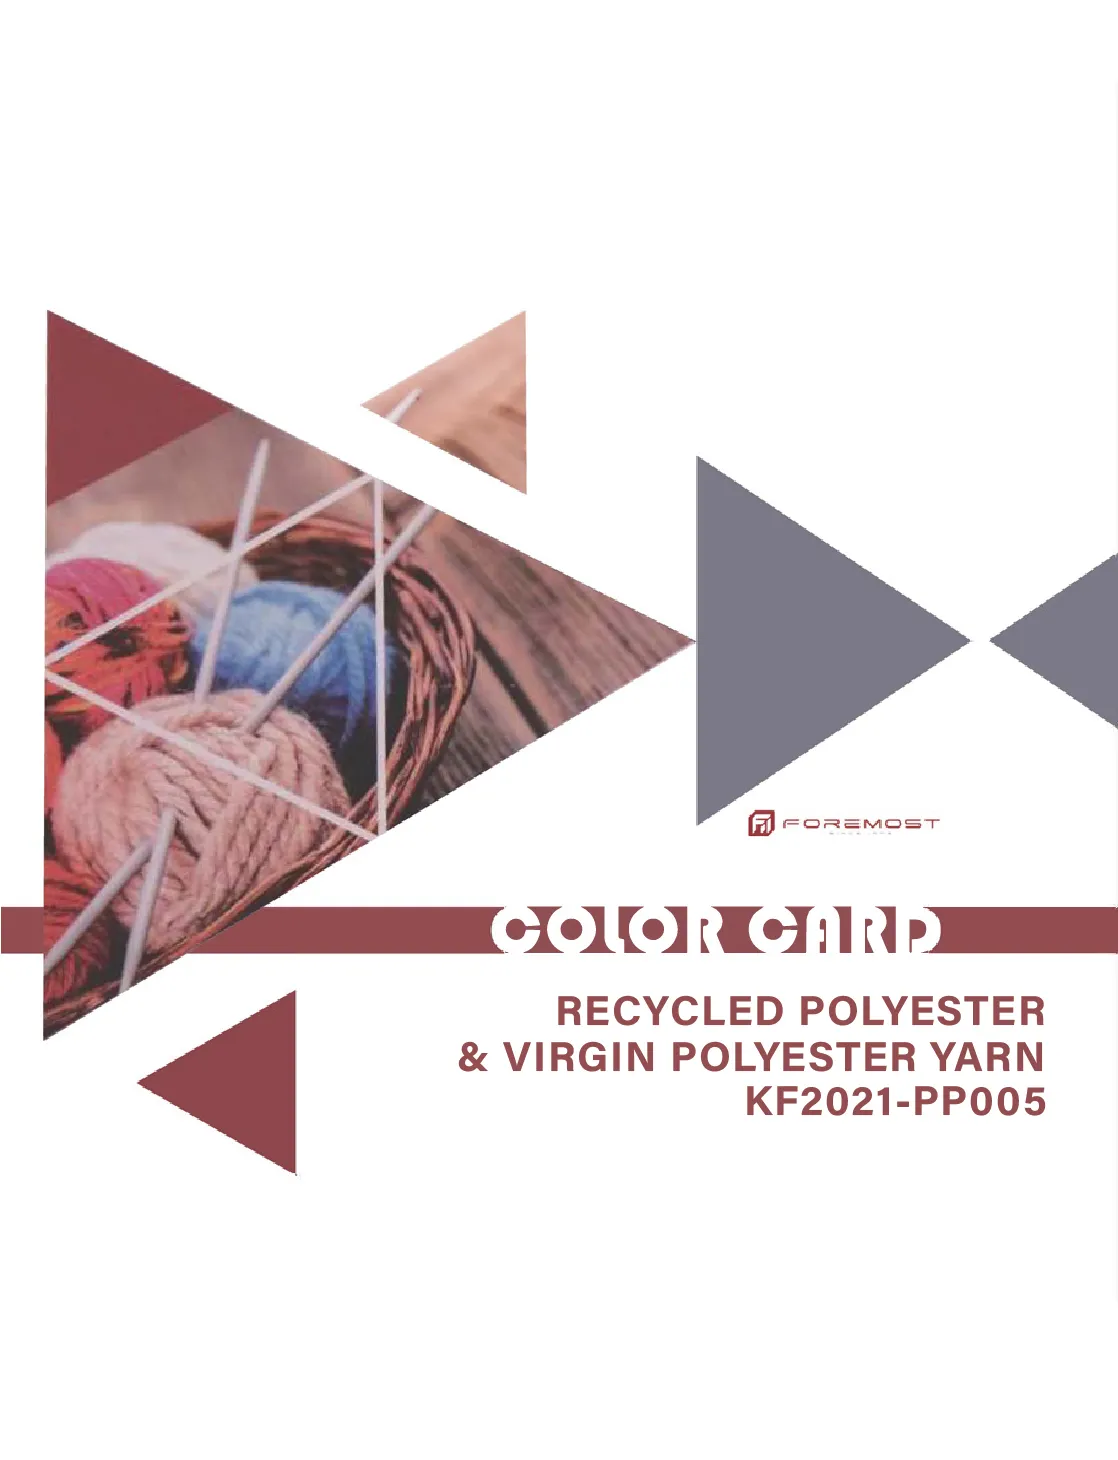 KF2021-PP005 poliéster reciclado & fio de poliéster virgem